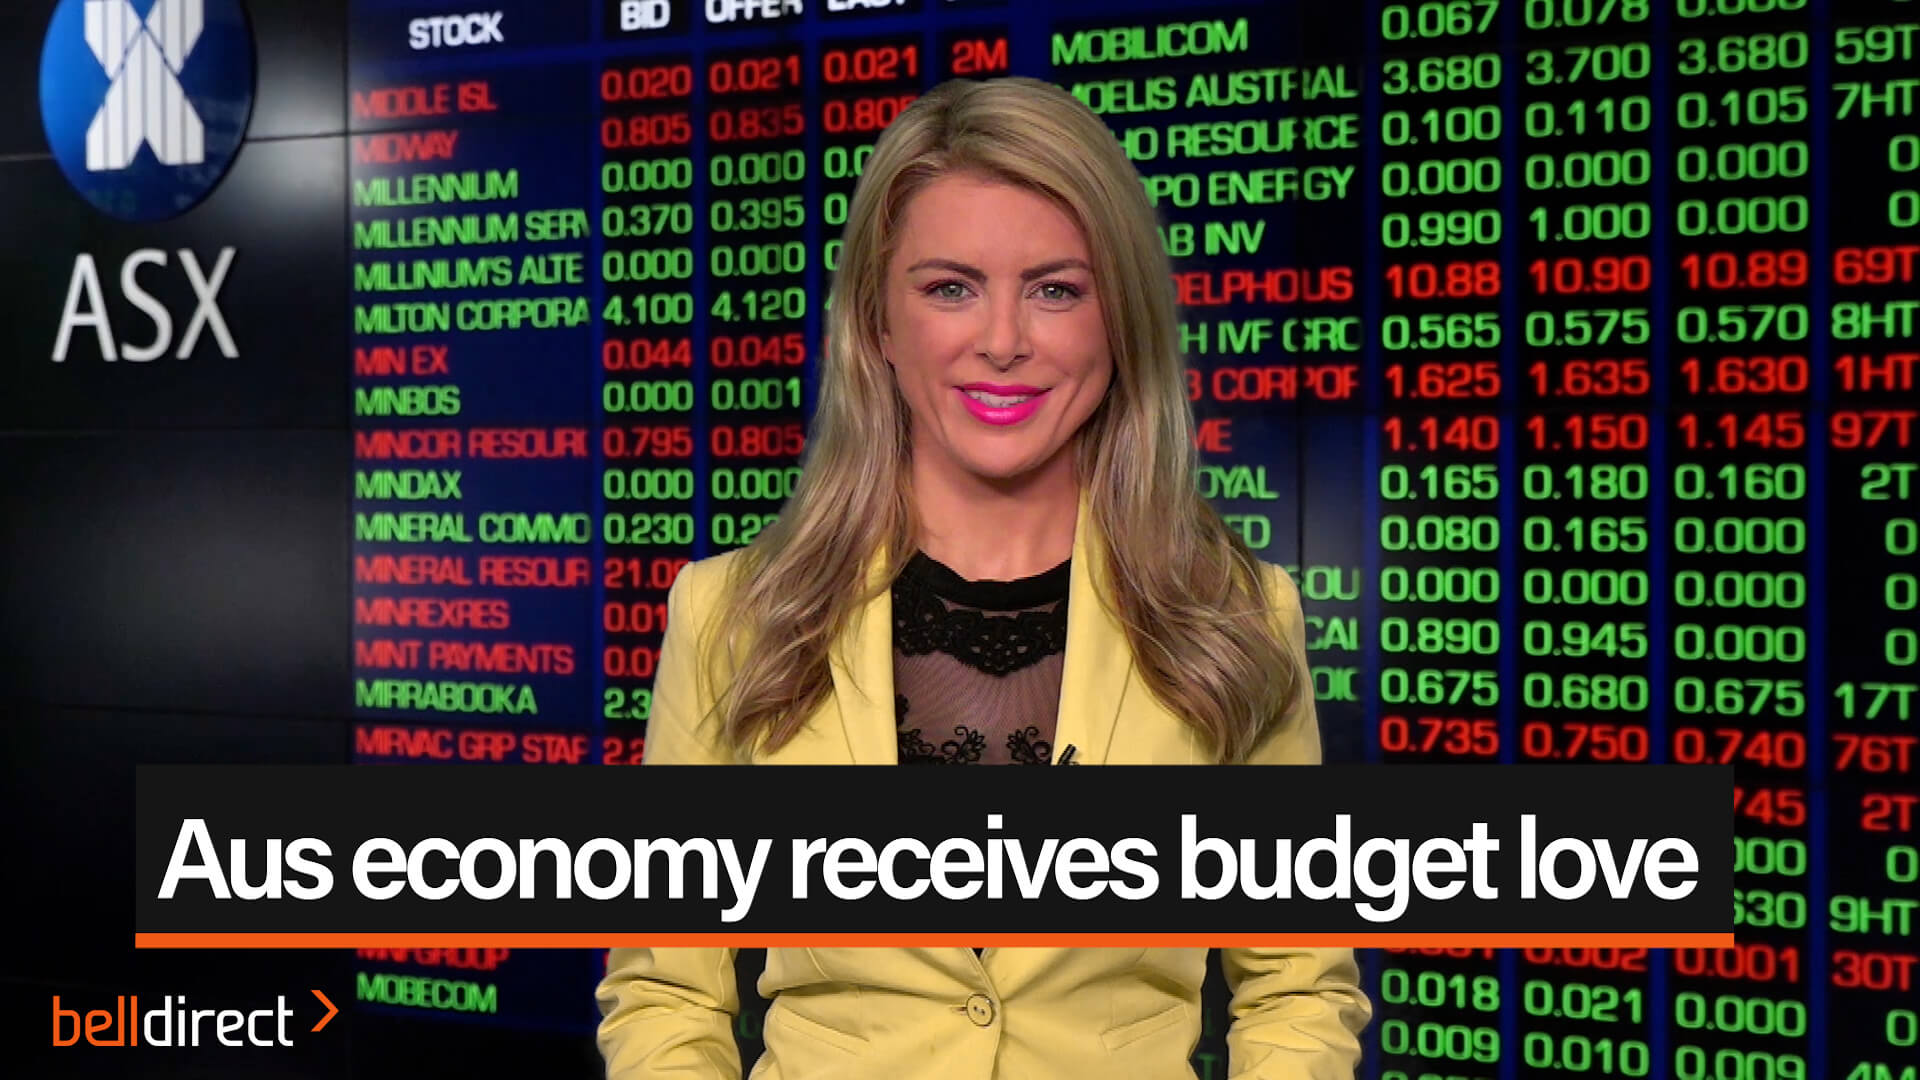 Aussie economy receives some budget love